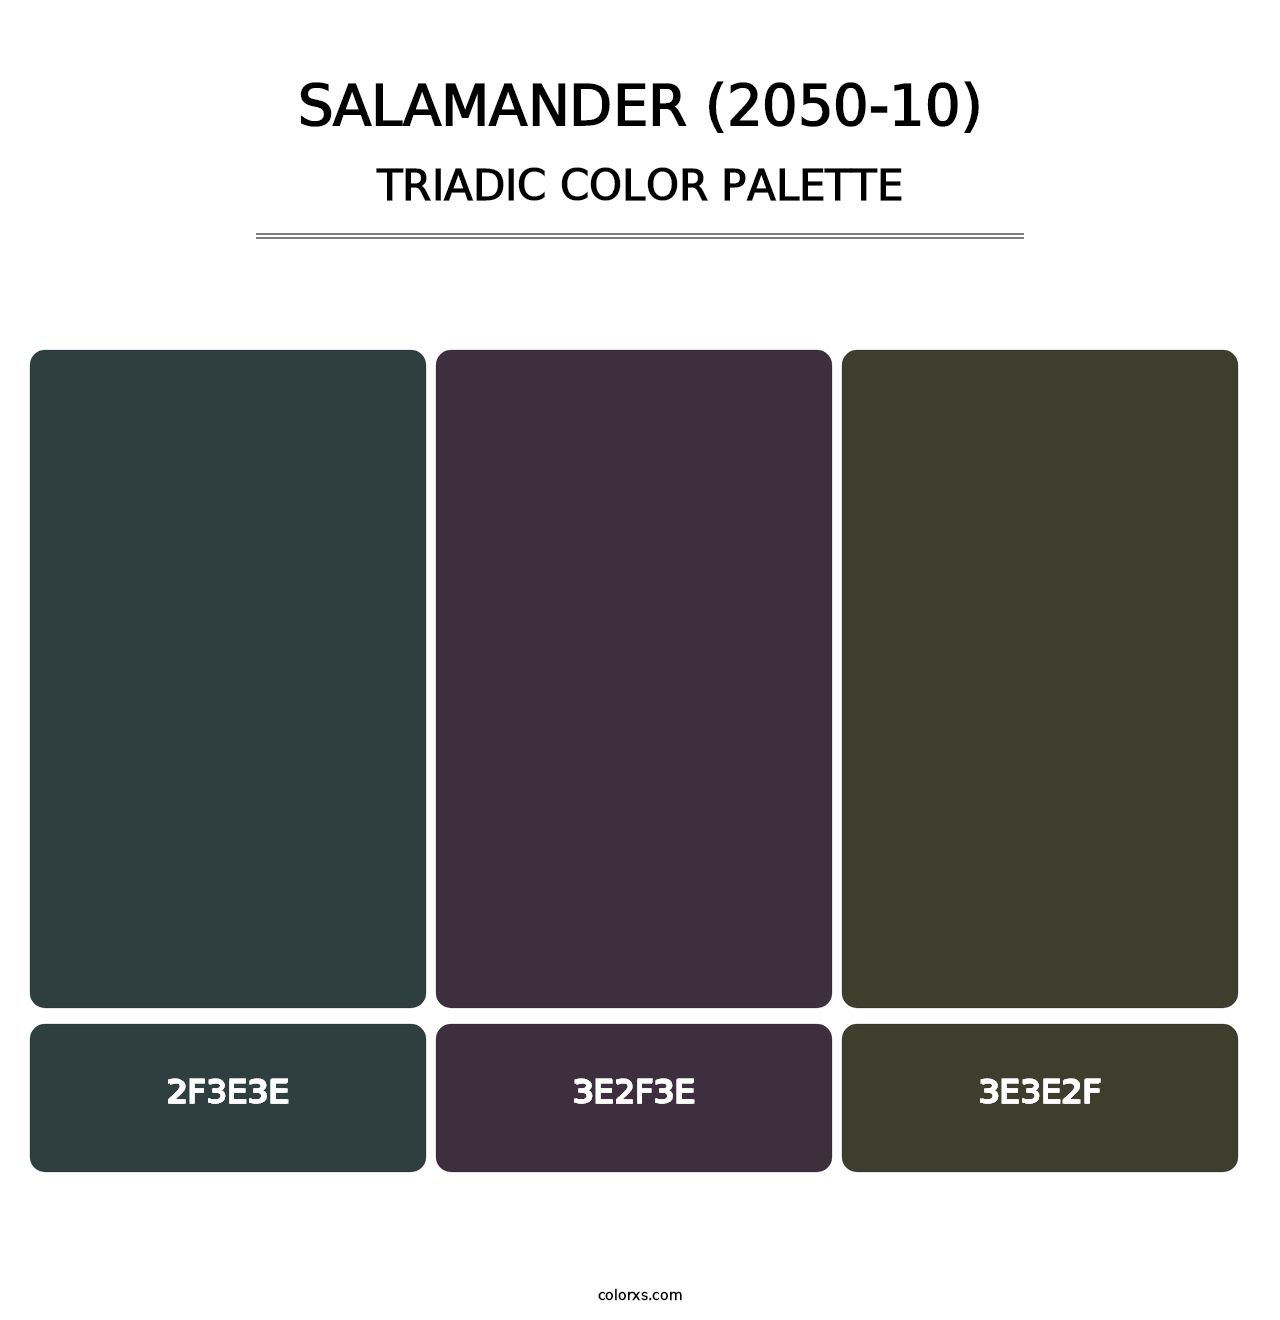 Salamander (2050-10) - Triadic Color Palette